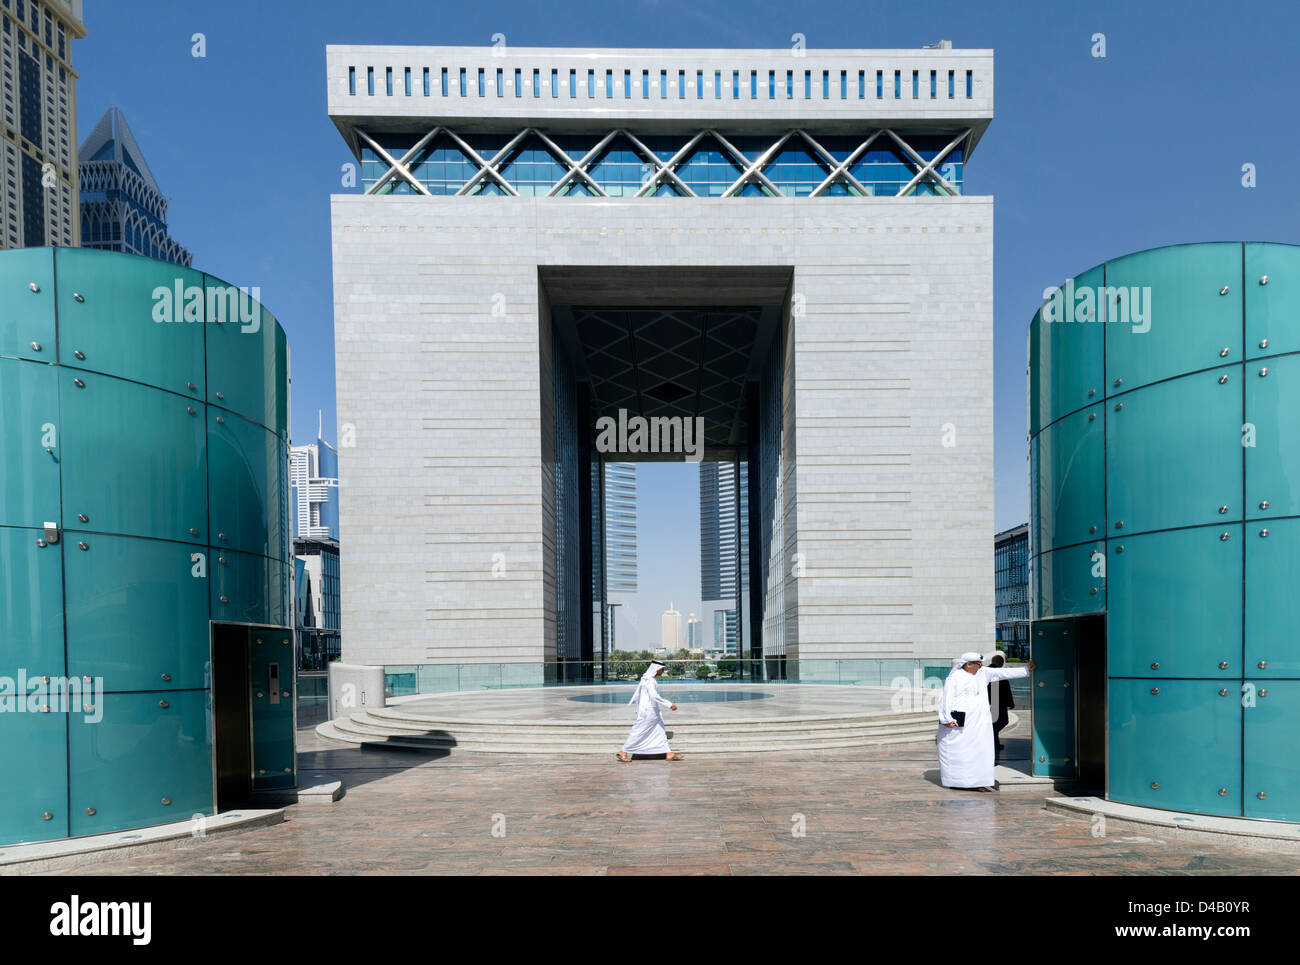 La puerta edificio en DIFC o el Centro Financiero Internacional de Dubai en Dubai, Emiratos Árabes Unidos EMIRATOS ÁRABES UNIDOS ORIENTE MEDIO Foto de stock